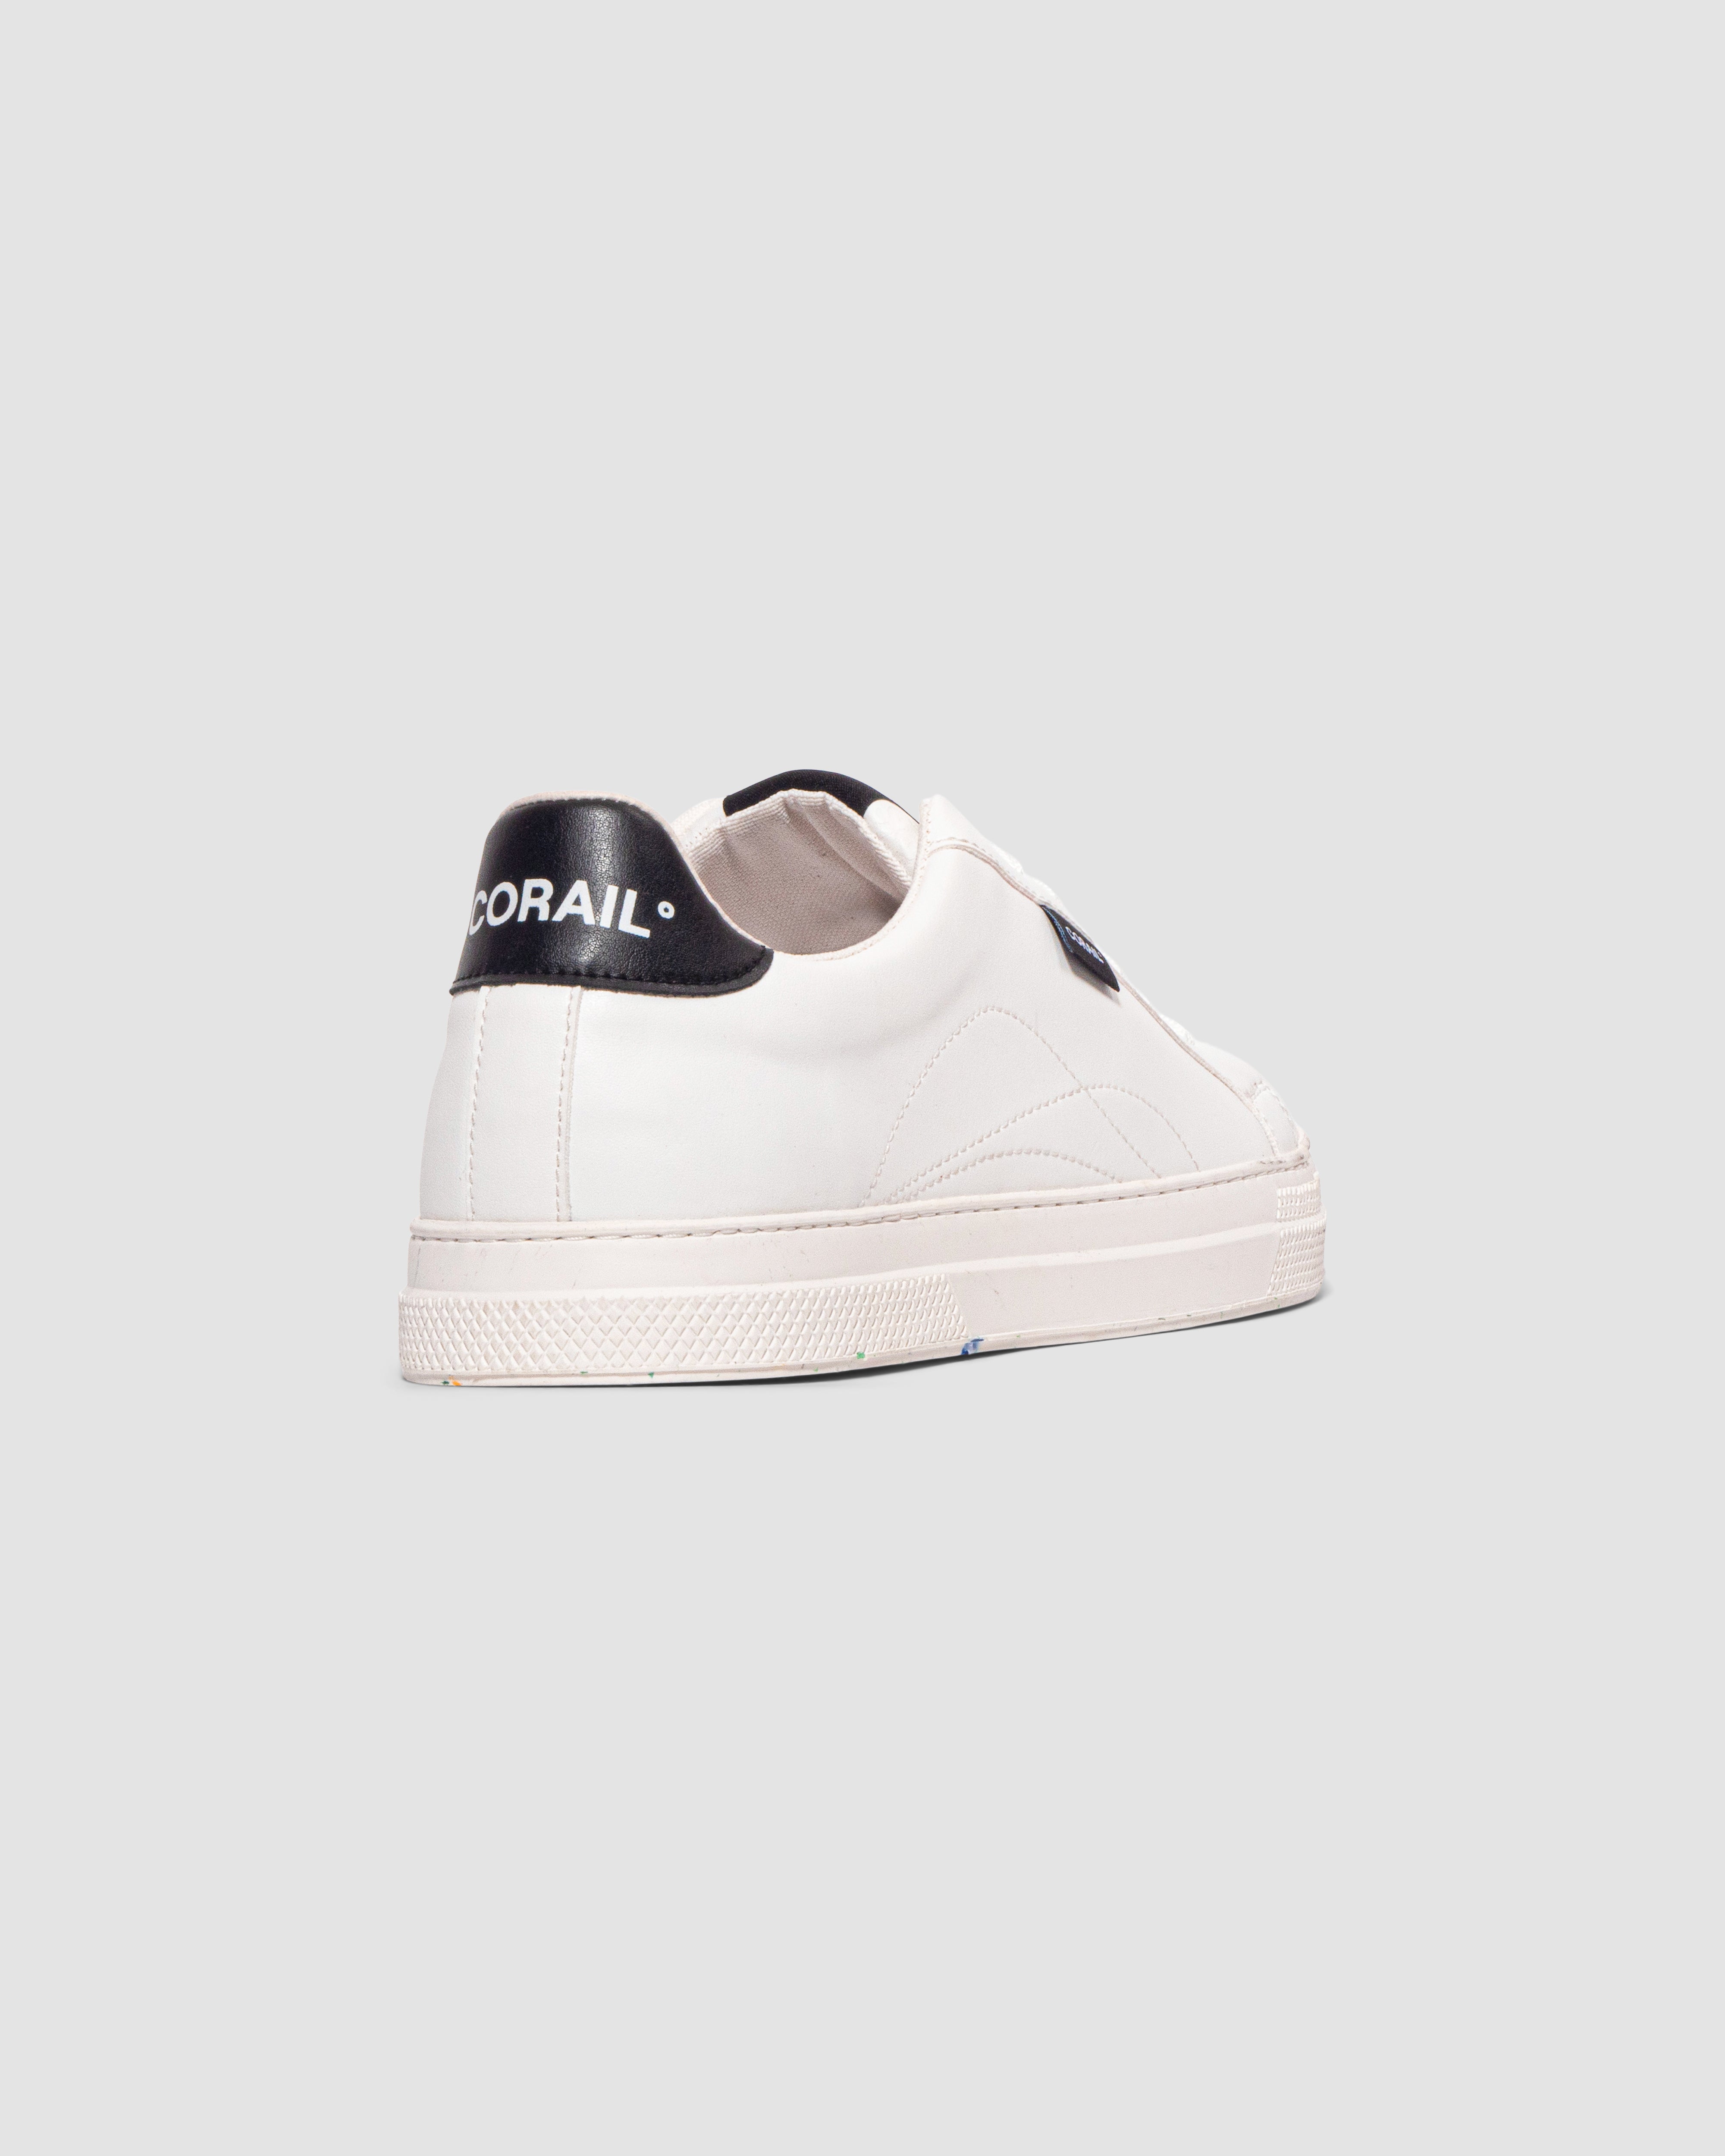 Origins Sneakers White/Black 3